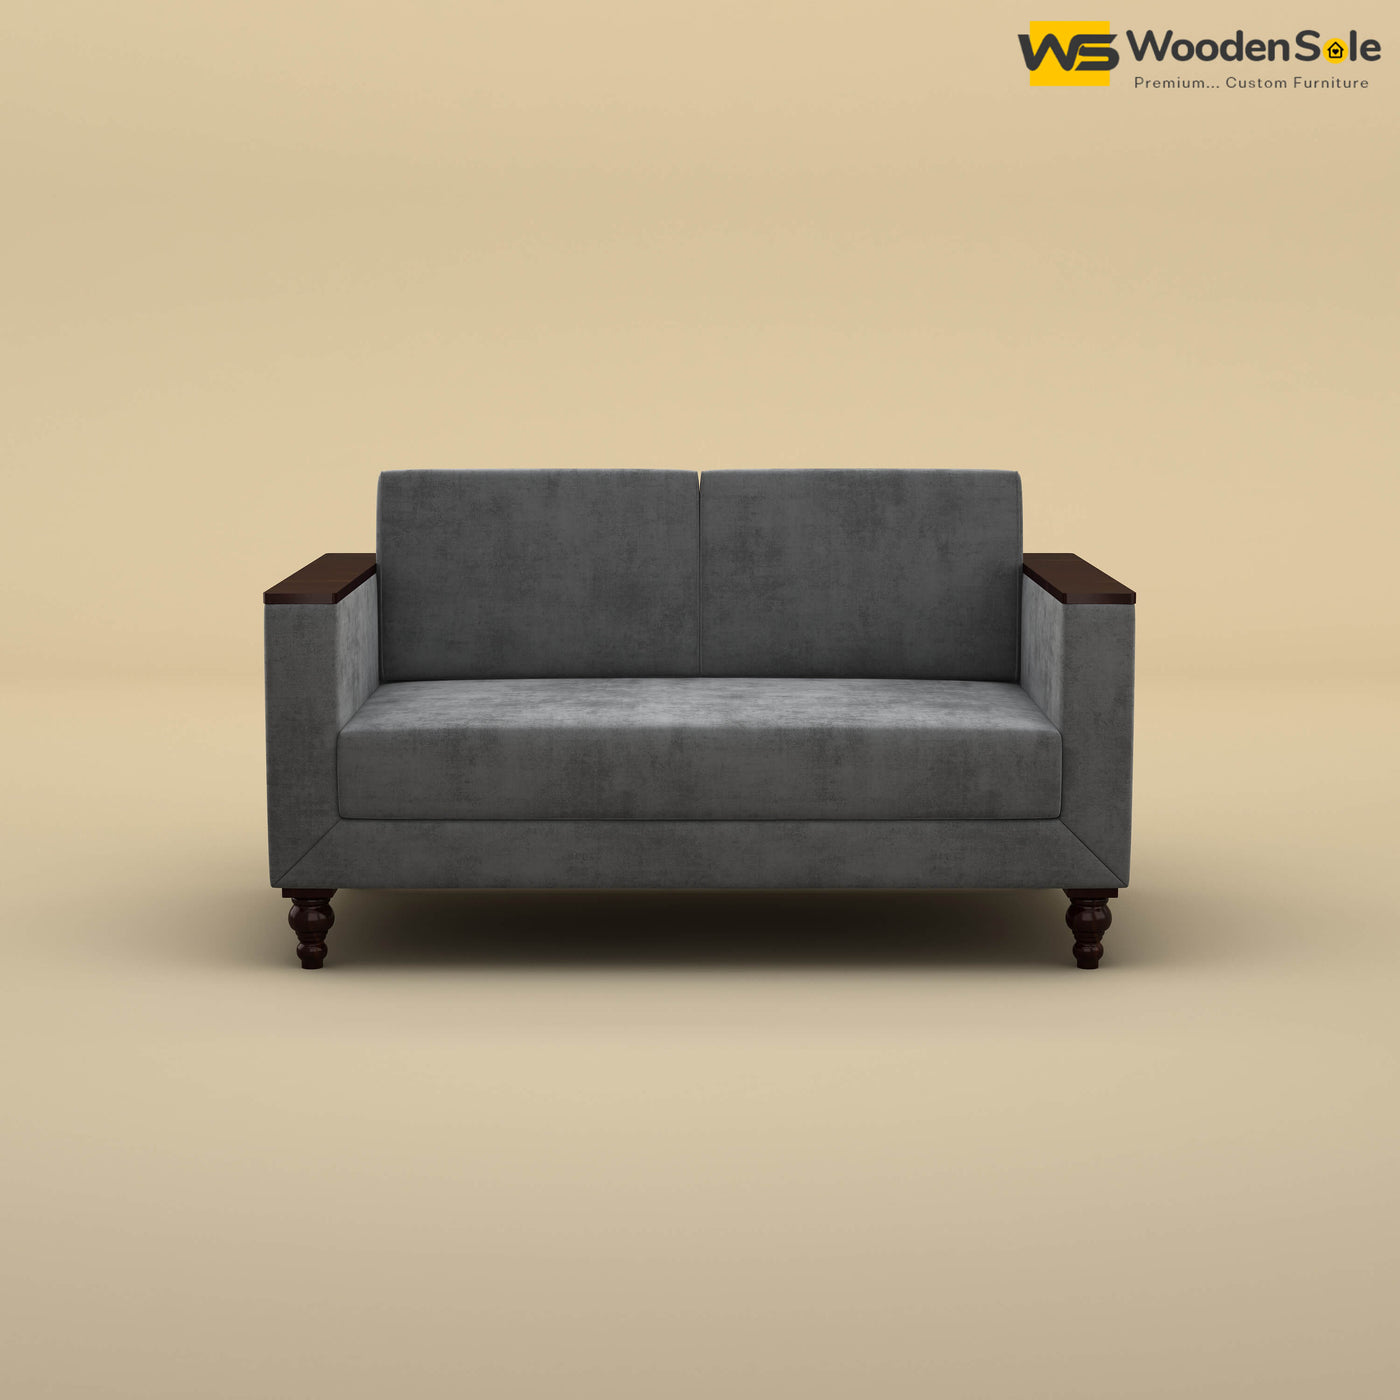 Tivoli 2 Seater Fabric Sofa (Velvet, Charcoal Gray)